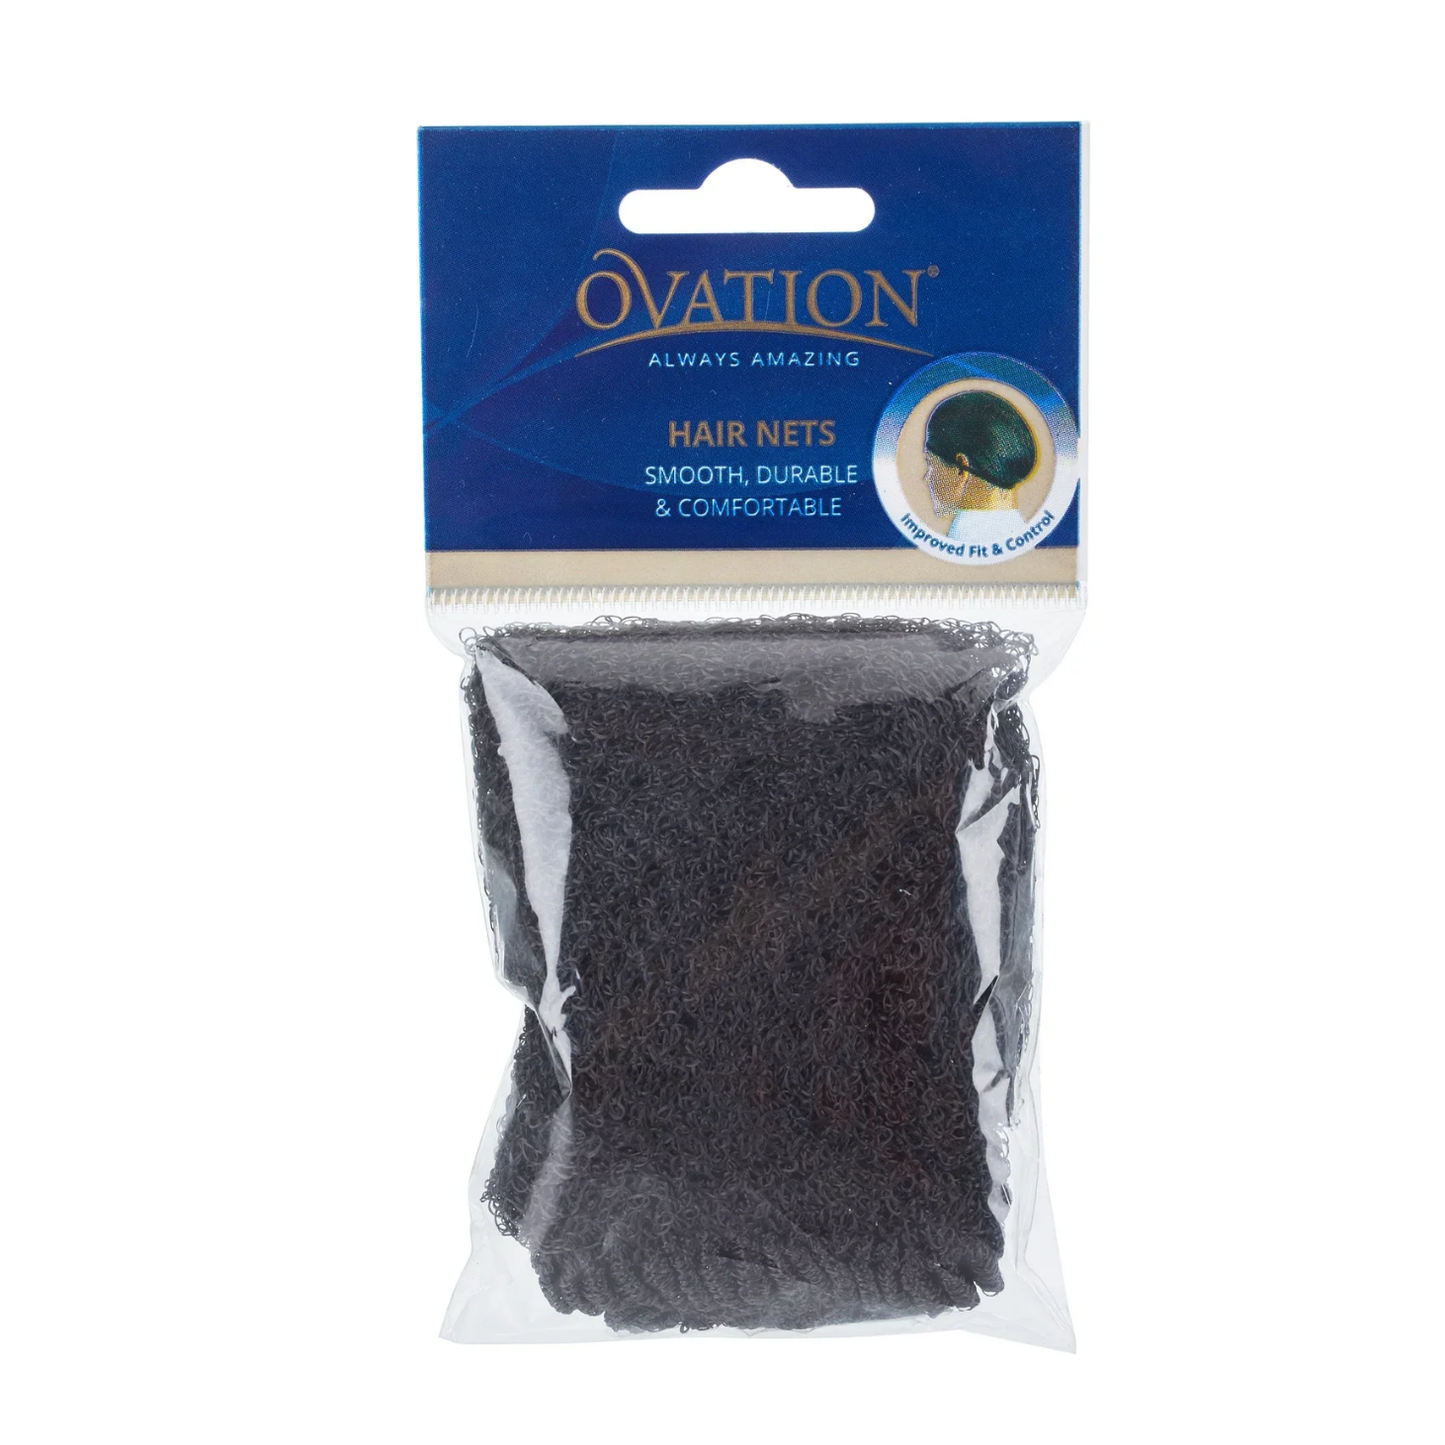 Ovation Deluxe hair net